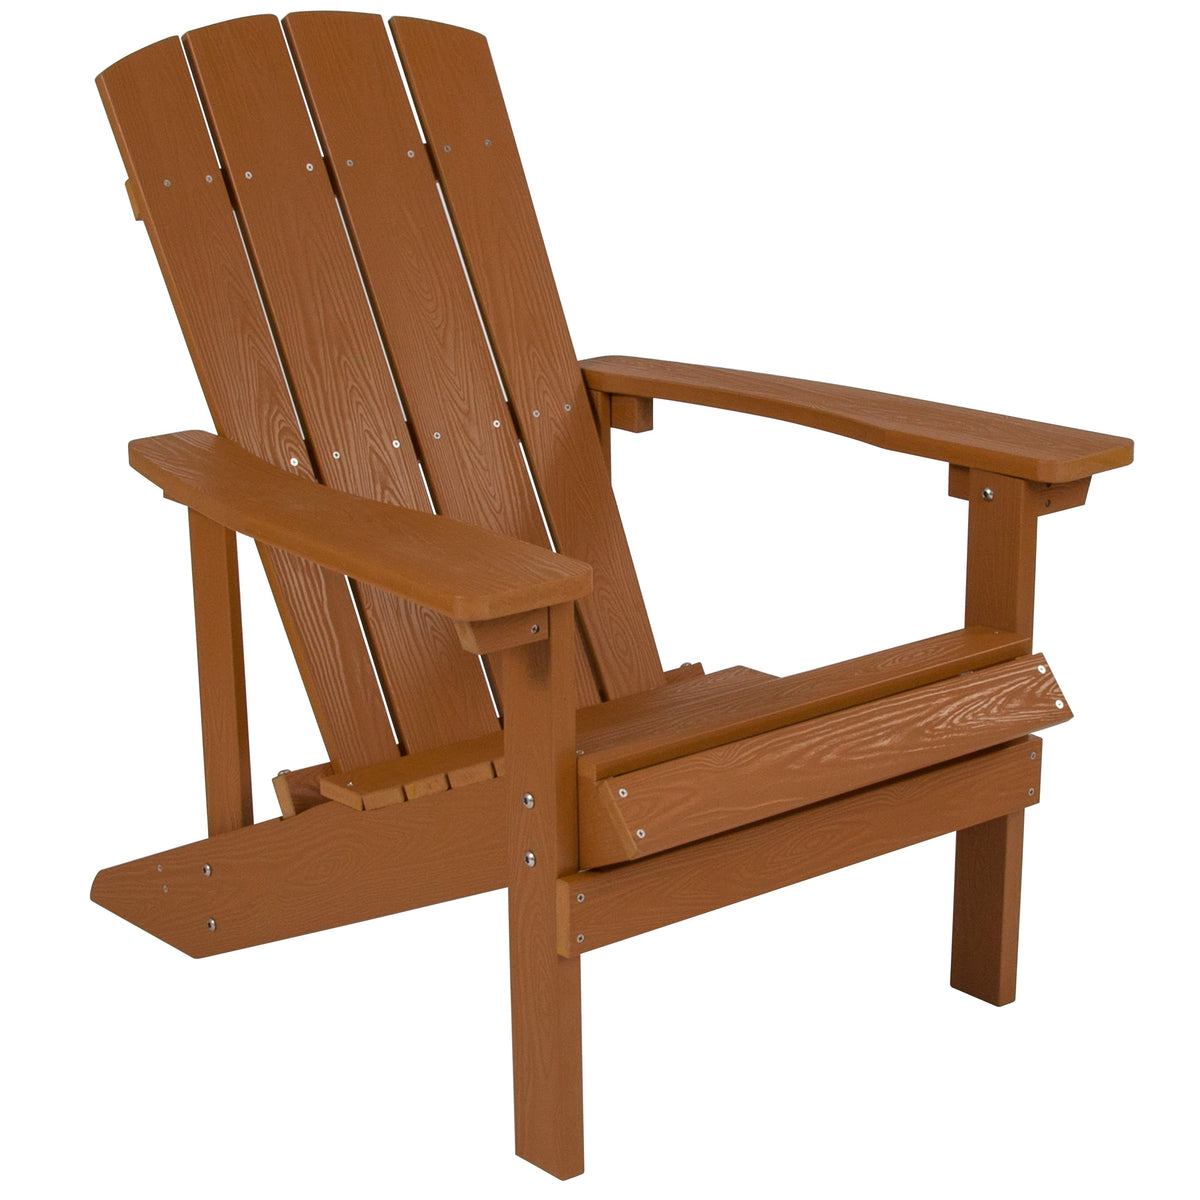 Teak |#| Outdoor Teak All-Weather Poly Resin Wood Adirondack Chair